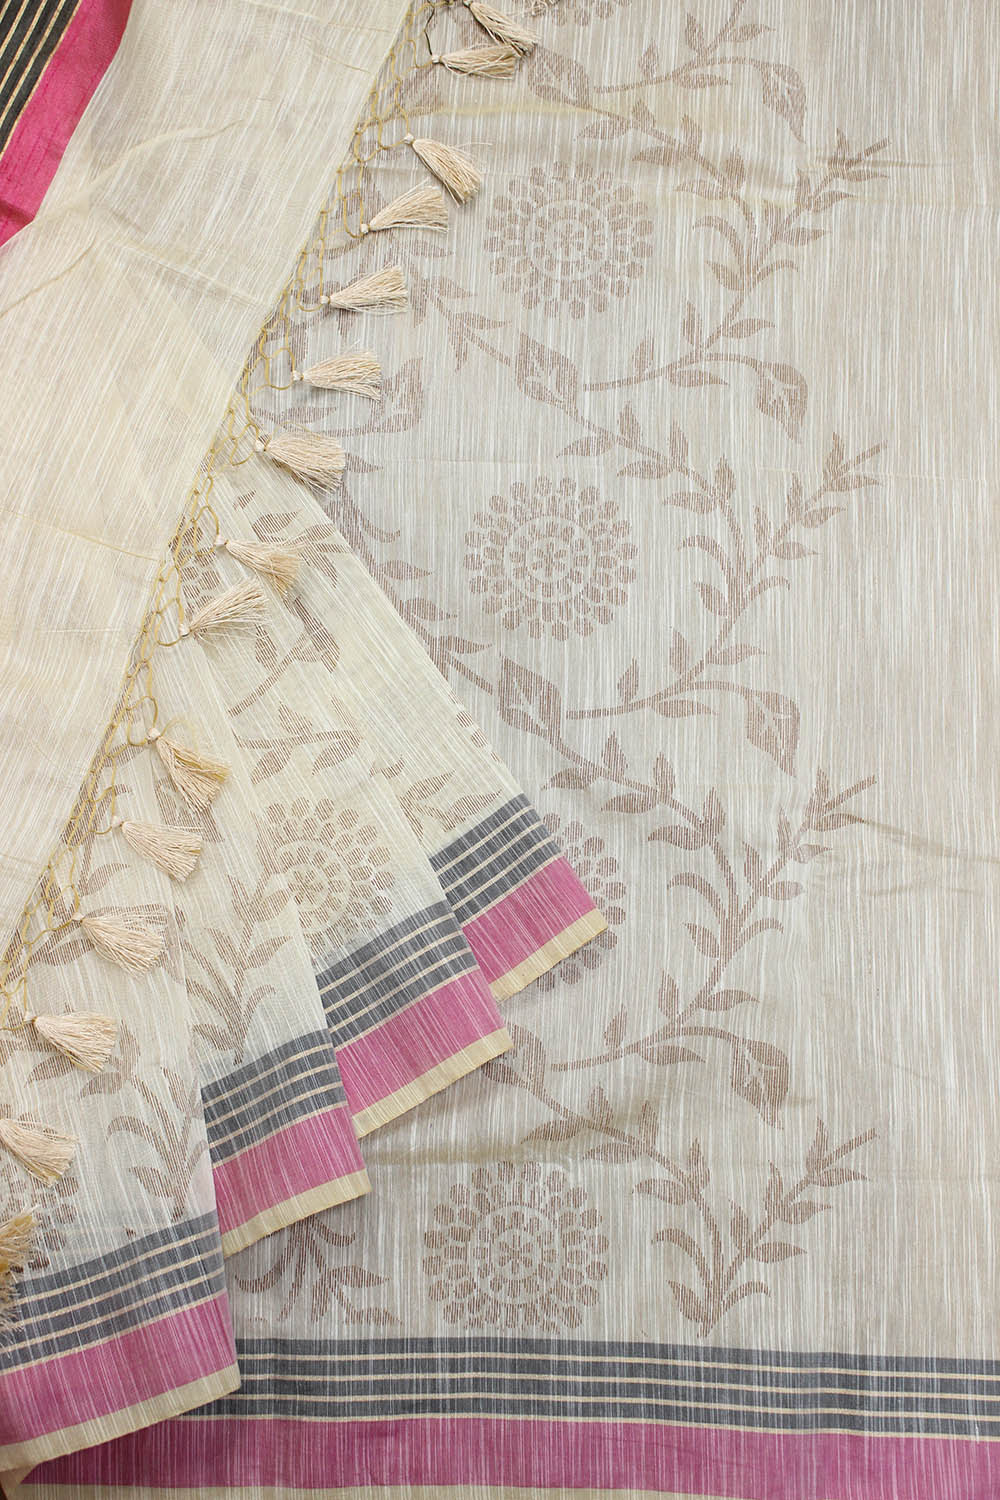 Stunning Off White Banarasi Cotton Silk Saree - Perfect for Any Occasion!